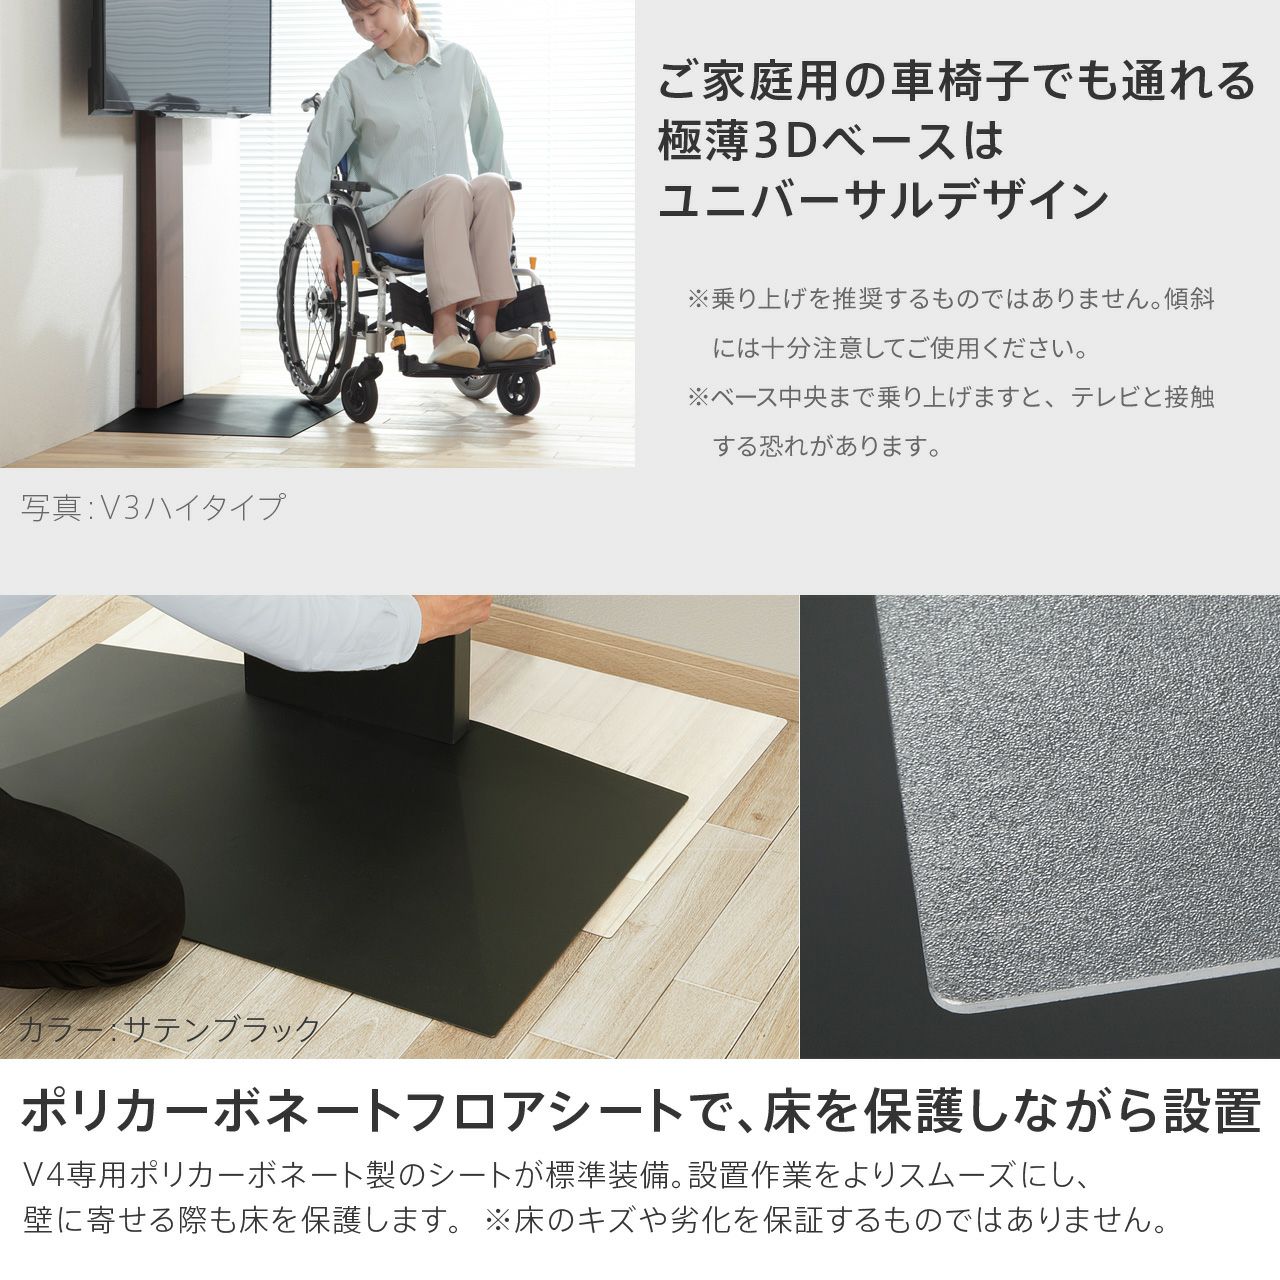 WALL INTERIOR TV STAND V4 車椅子でも通れる極薄3Dベースはユニバーサルデザイン